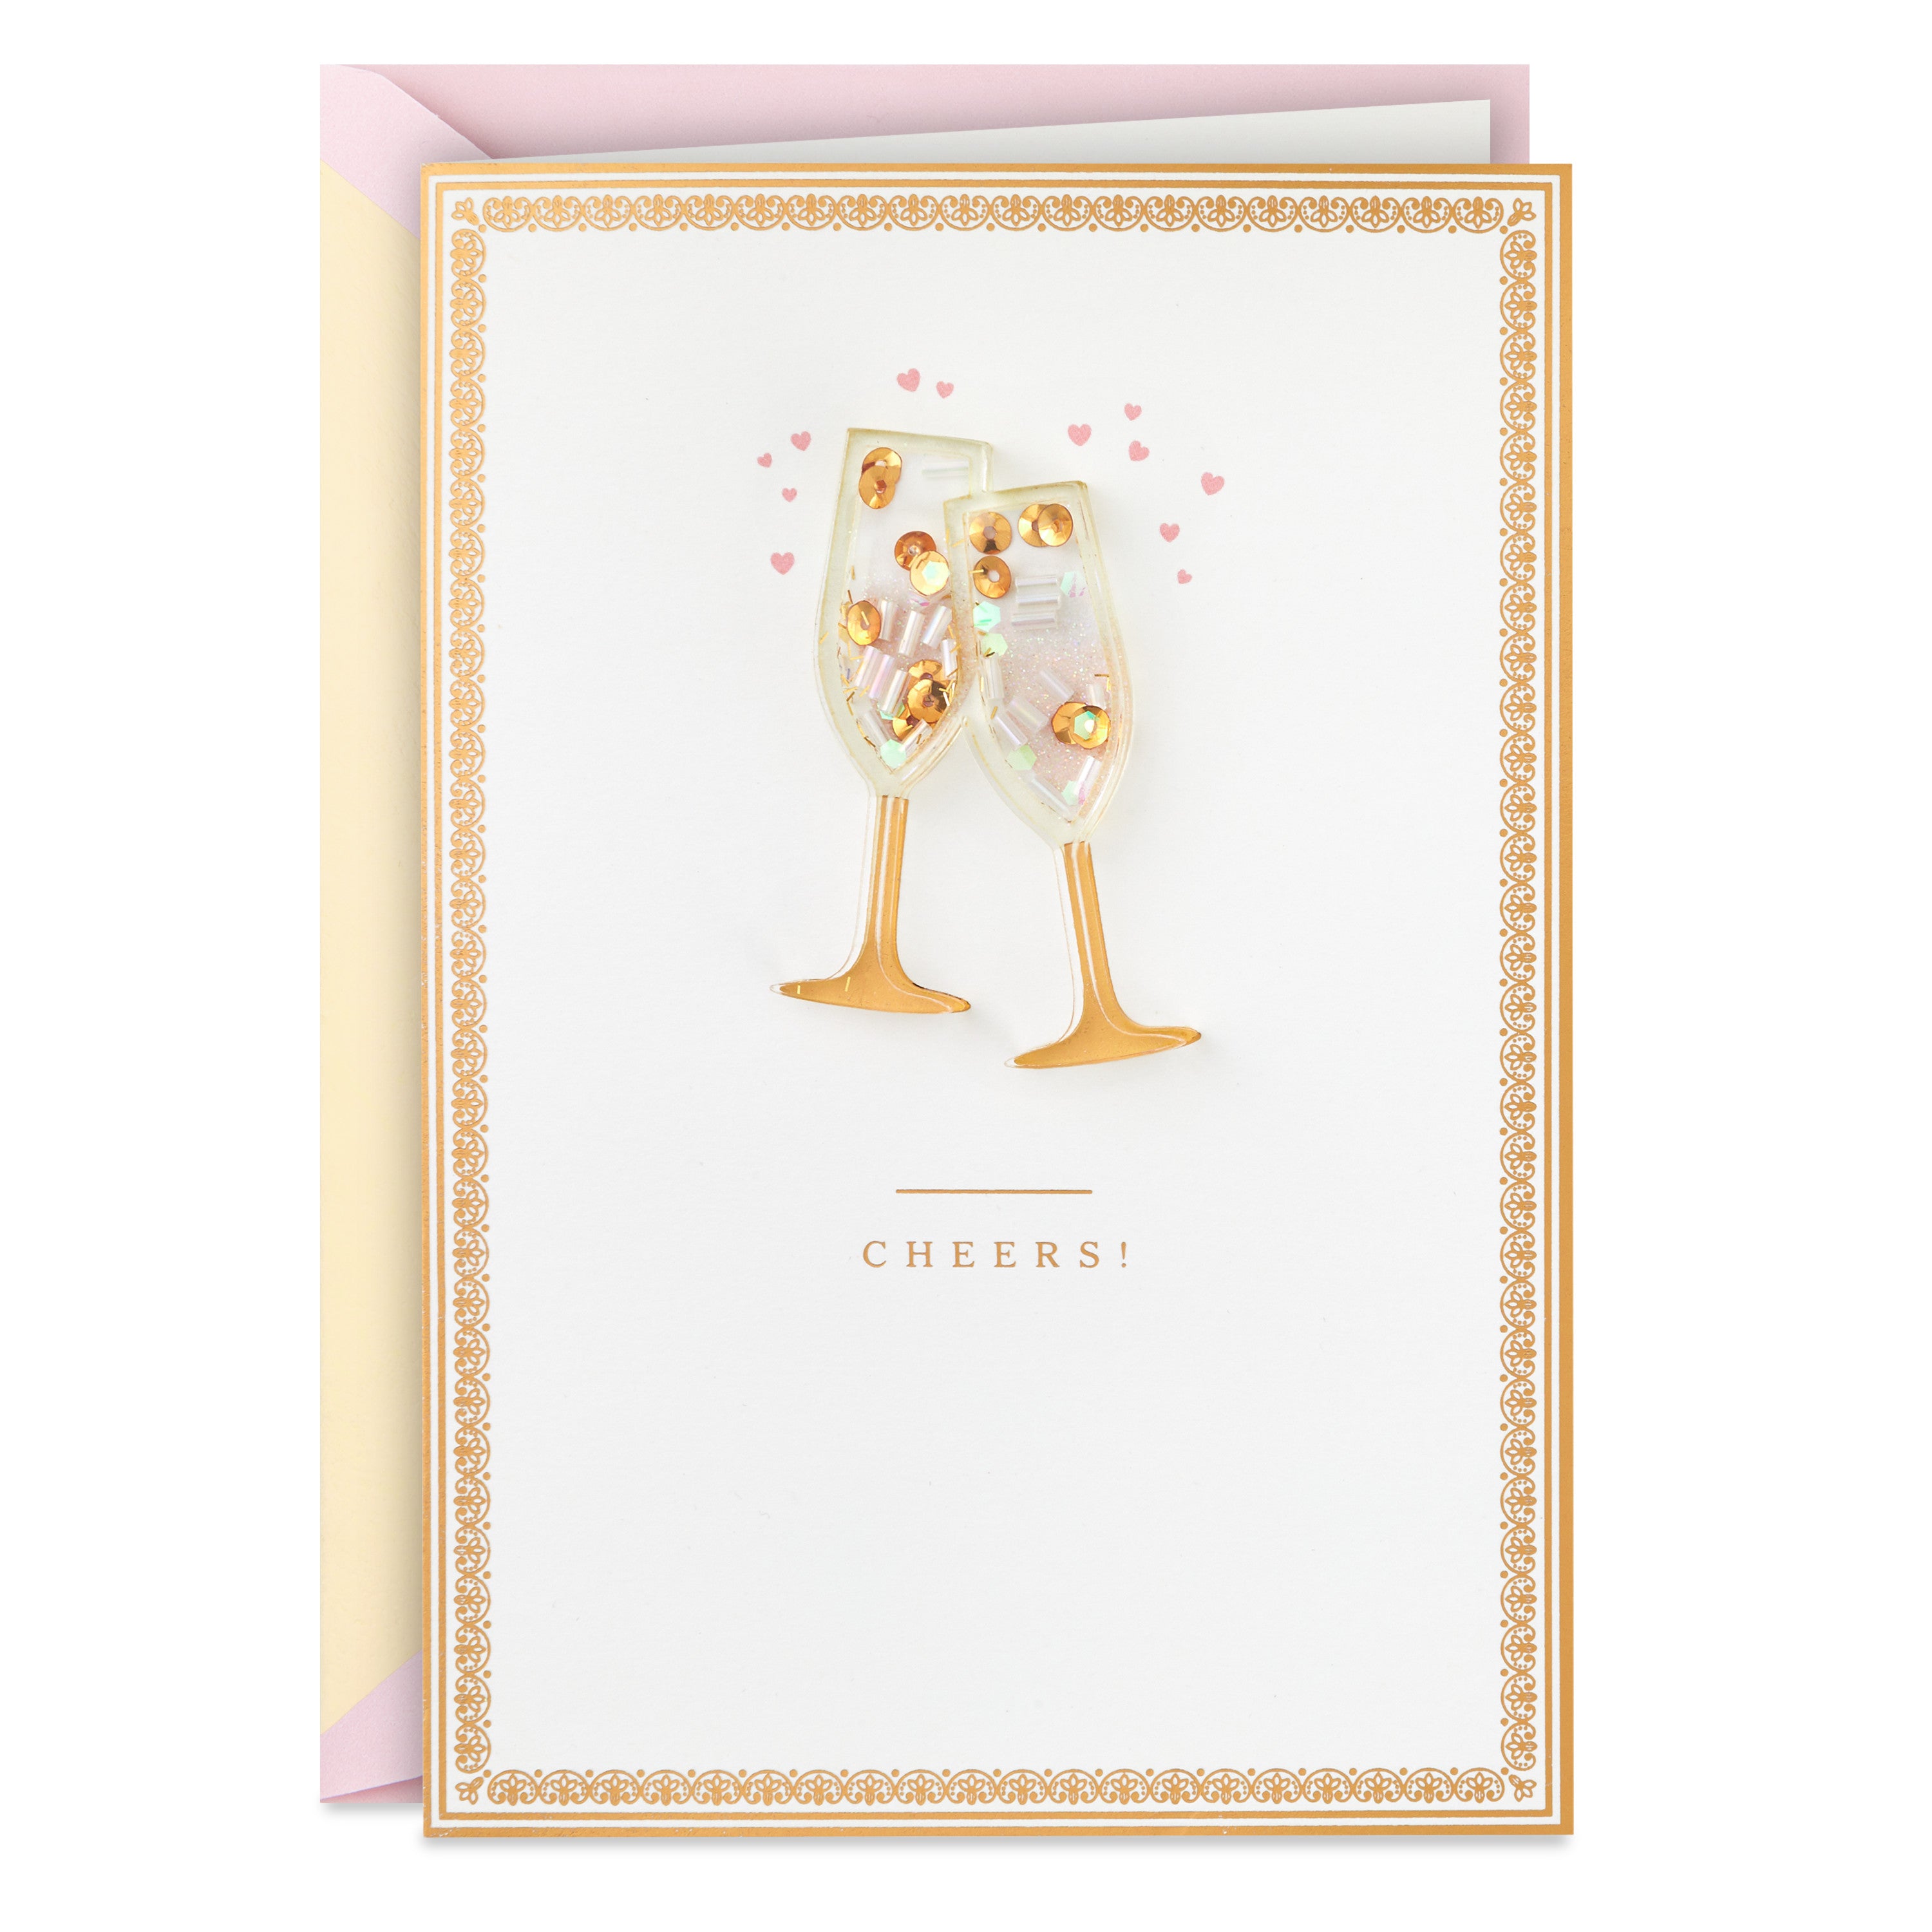 Hallmark Signature Anniversary Card for Couple (Champagne Cheers)